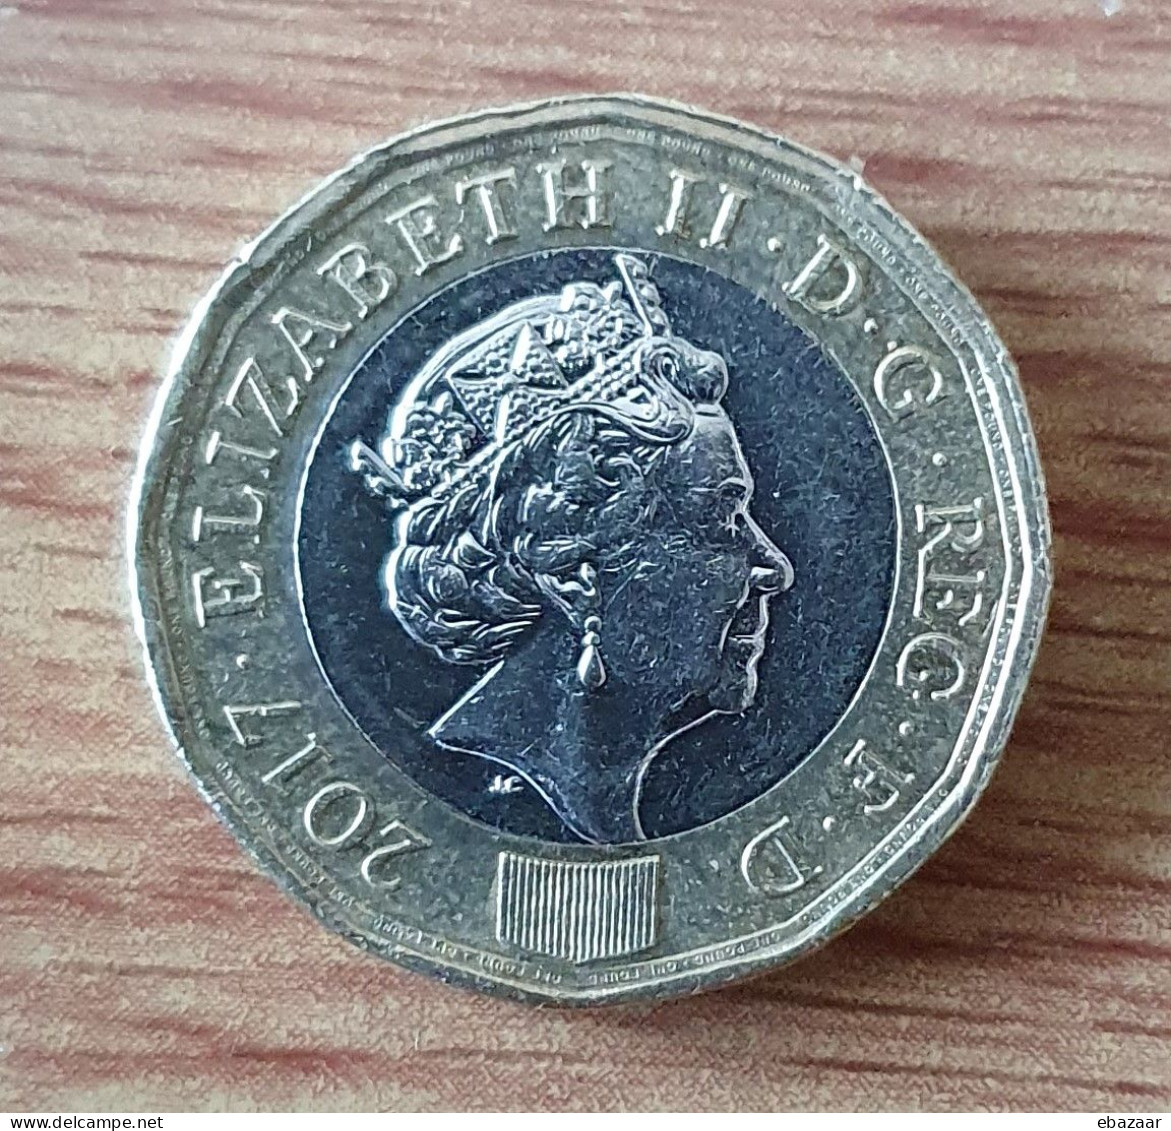 Great Britain 2017 United Kingdom Of England H.M. Queen Elizabeth II - One Pound Coin UK - 1 Pond